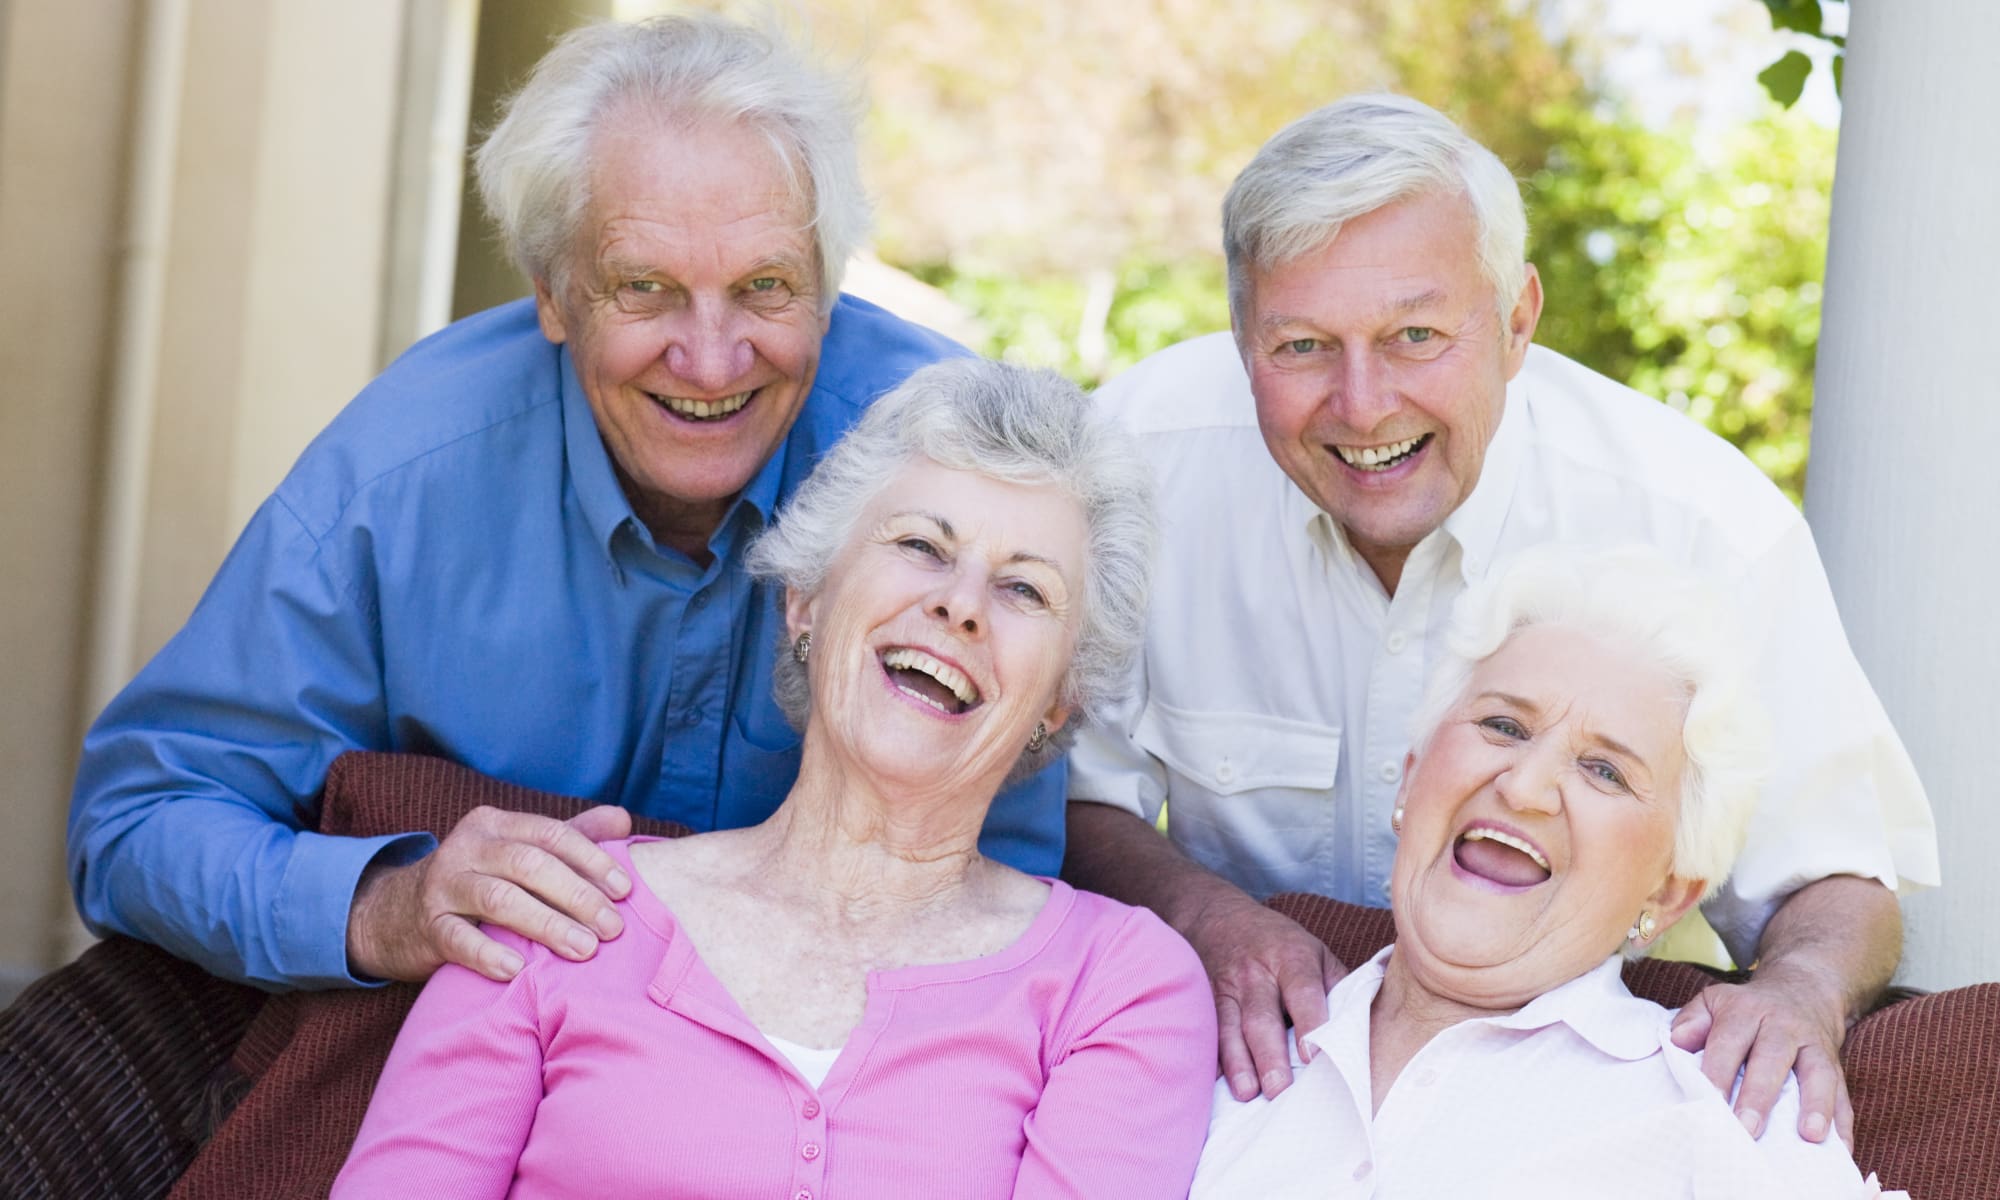 Bradenton senior living has amazing care options